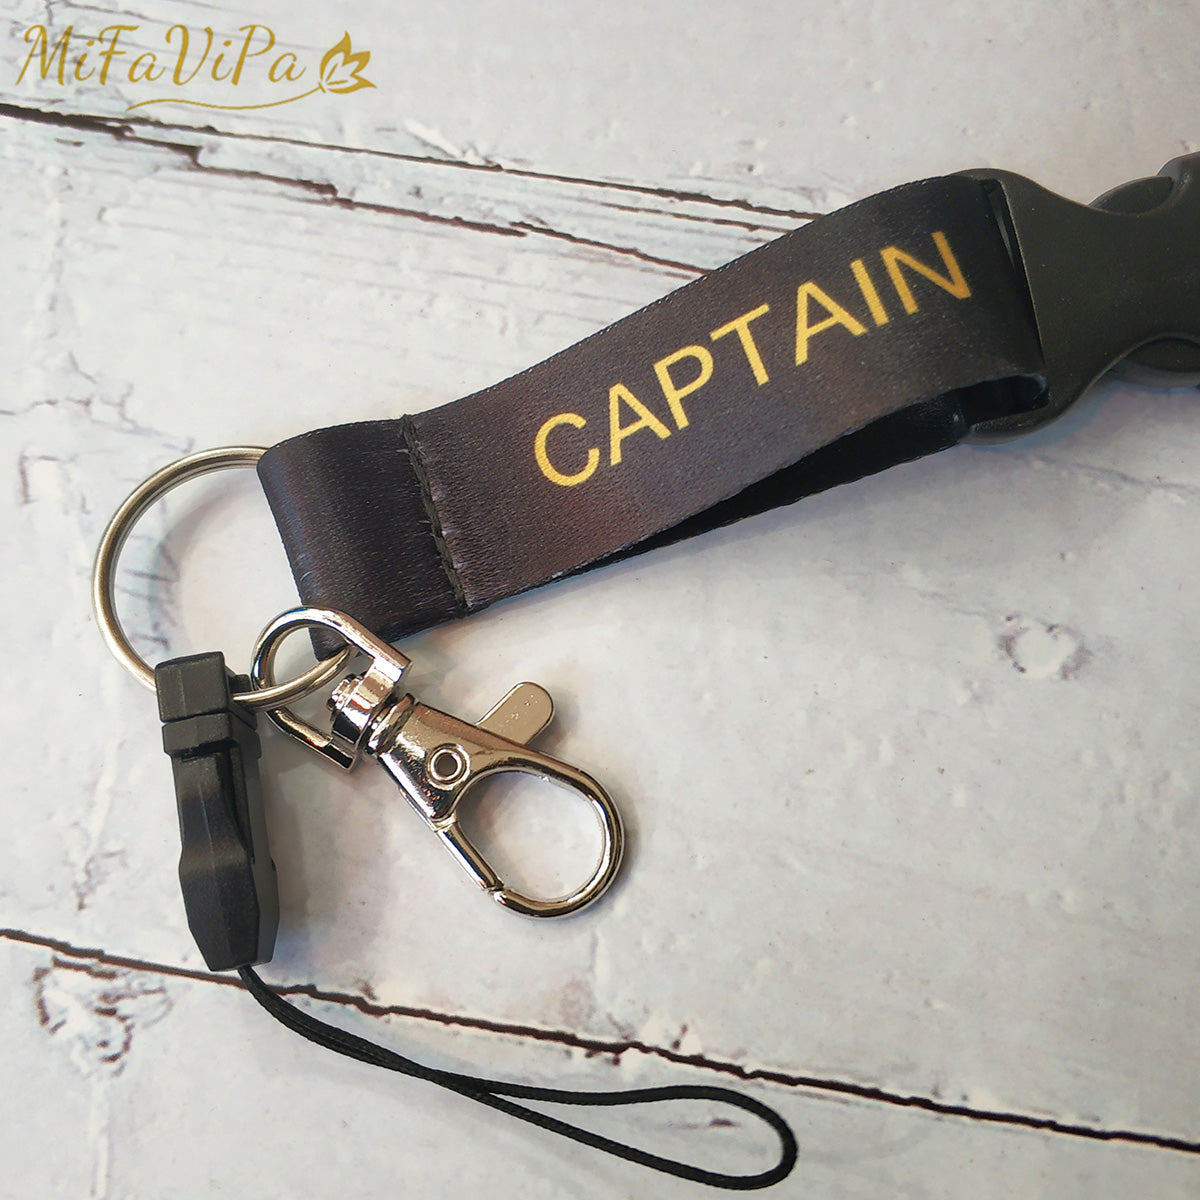 2 PCS Captain Chaveiro Fashion Trinket Neck Strap Keychain AV8R